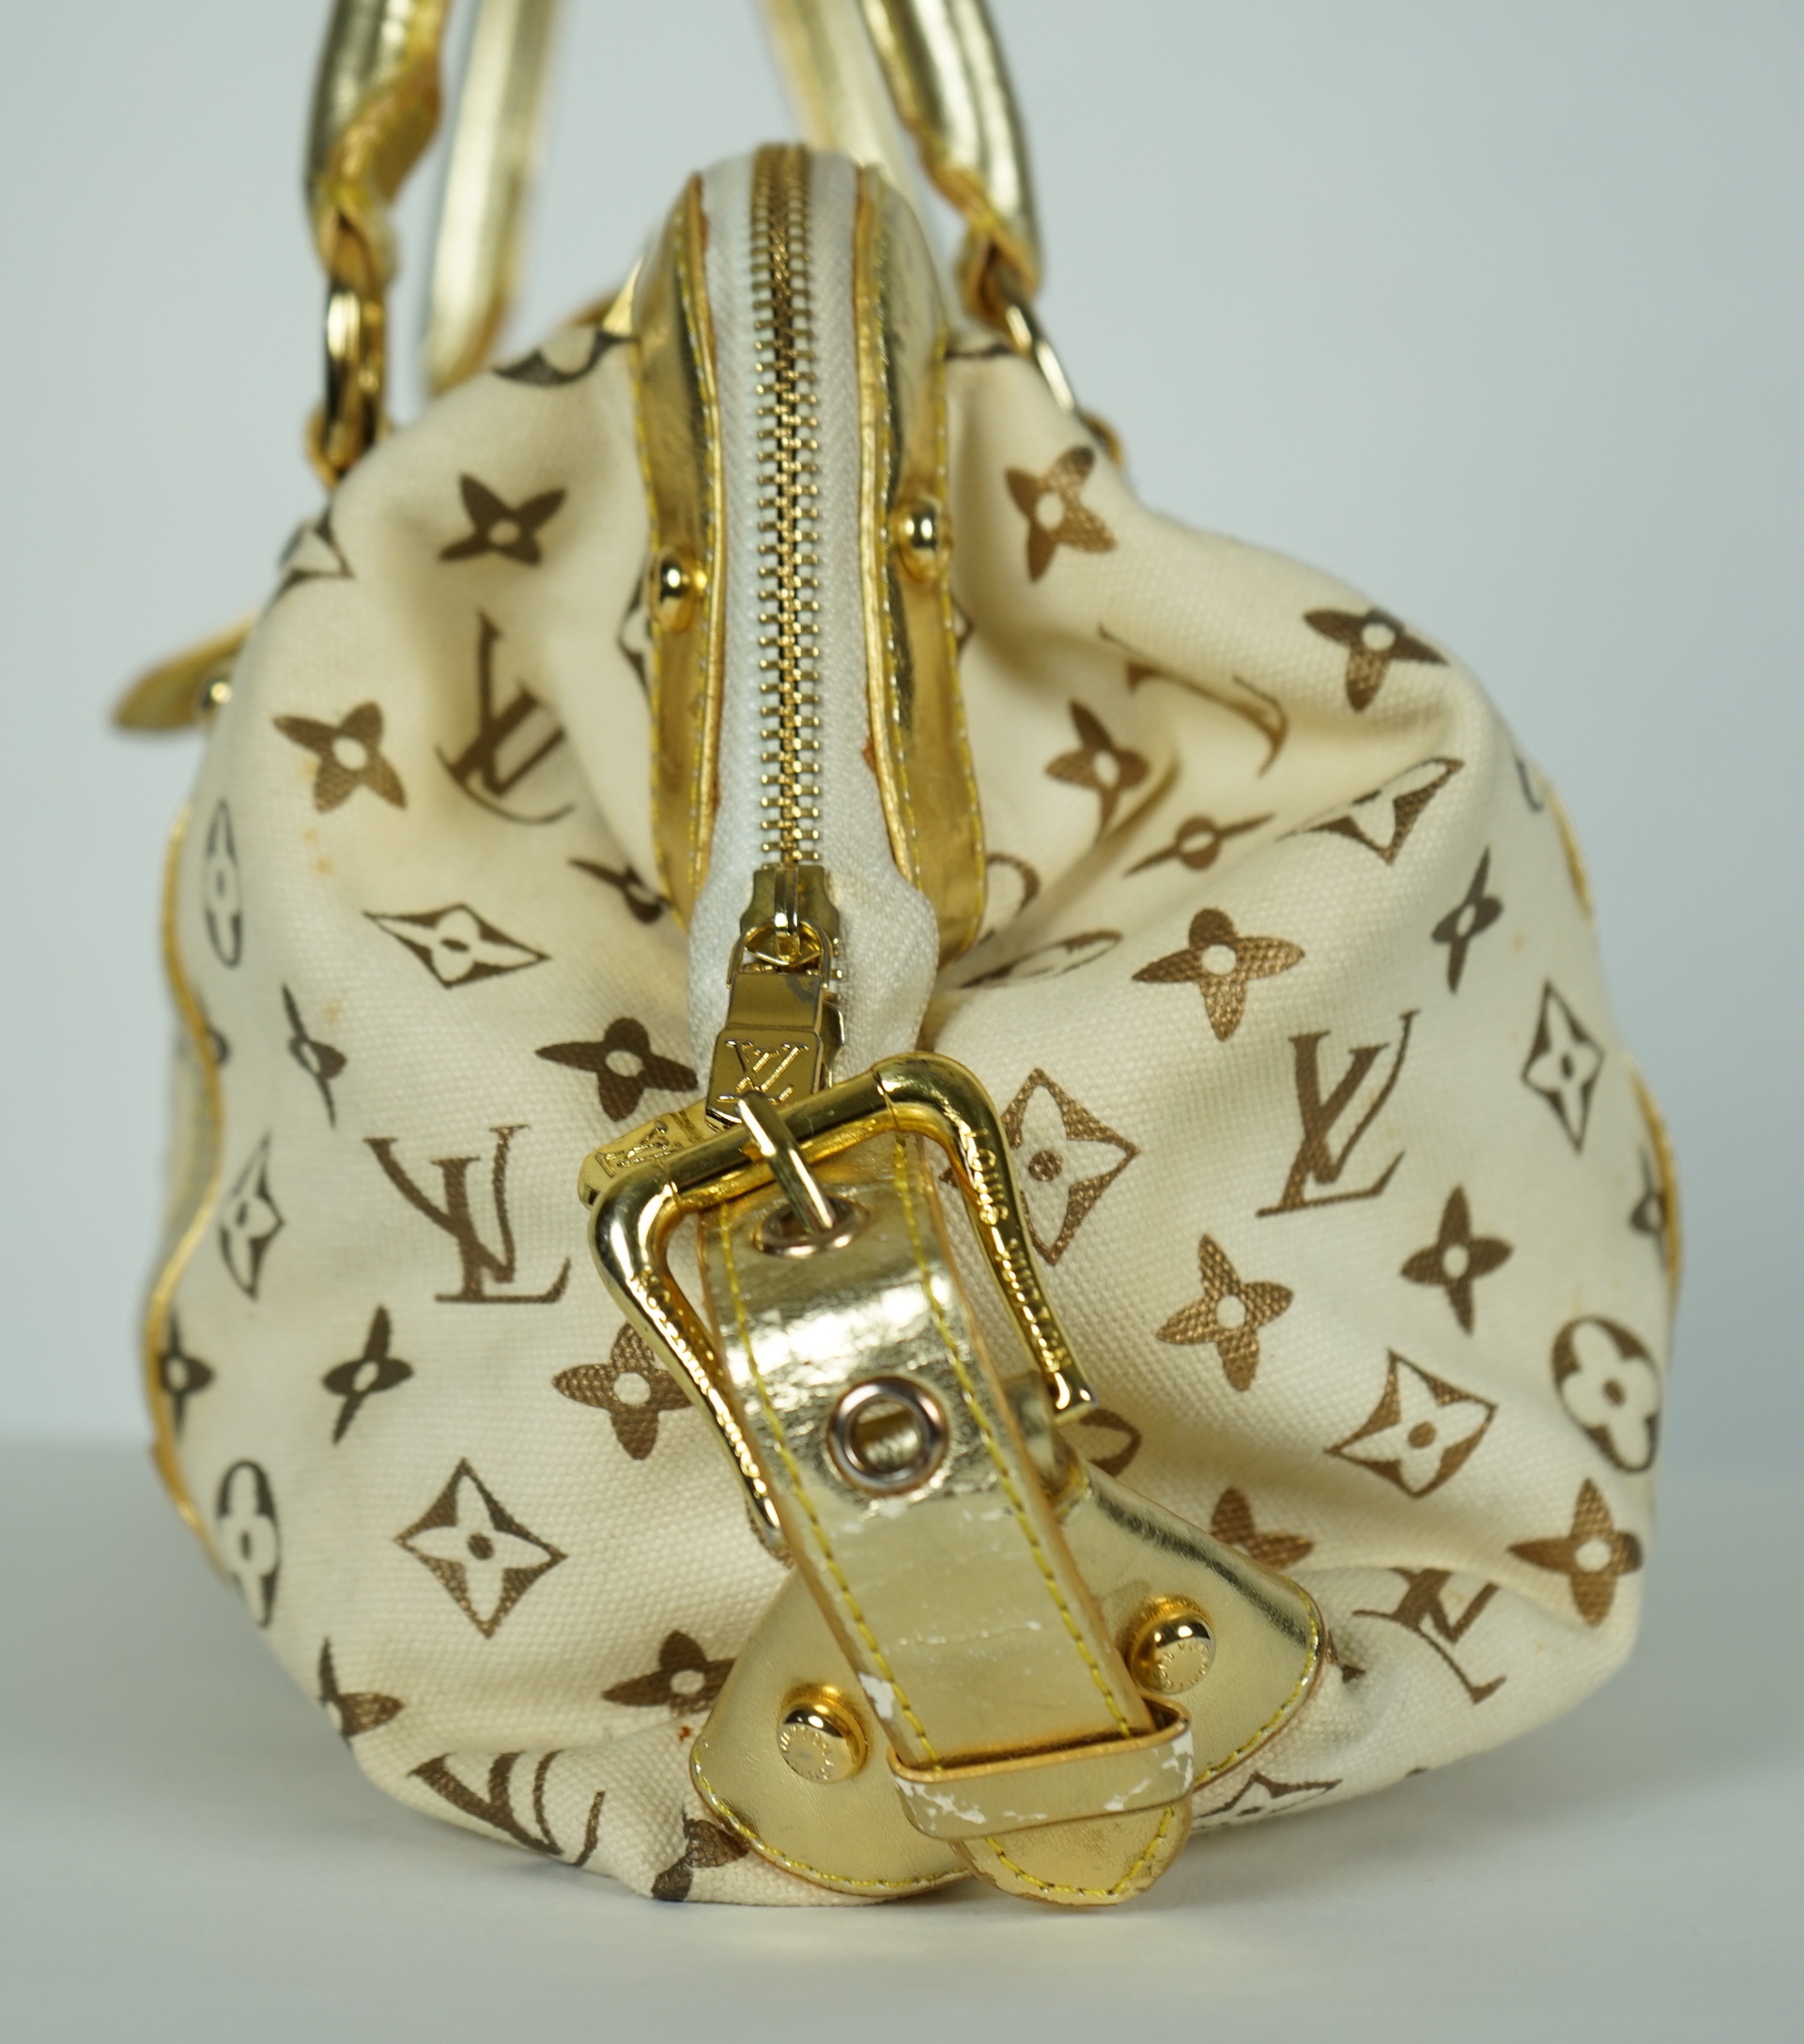 A vintage Louis Vuitton Theda beige and brown Monogram bag